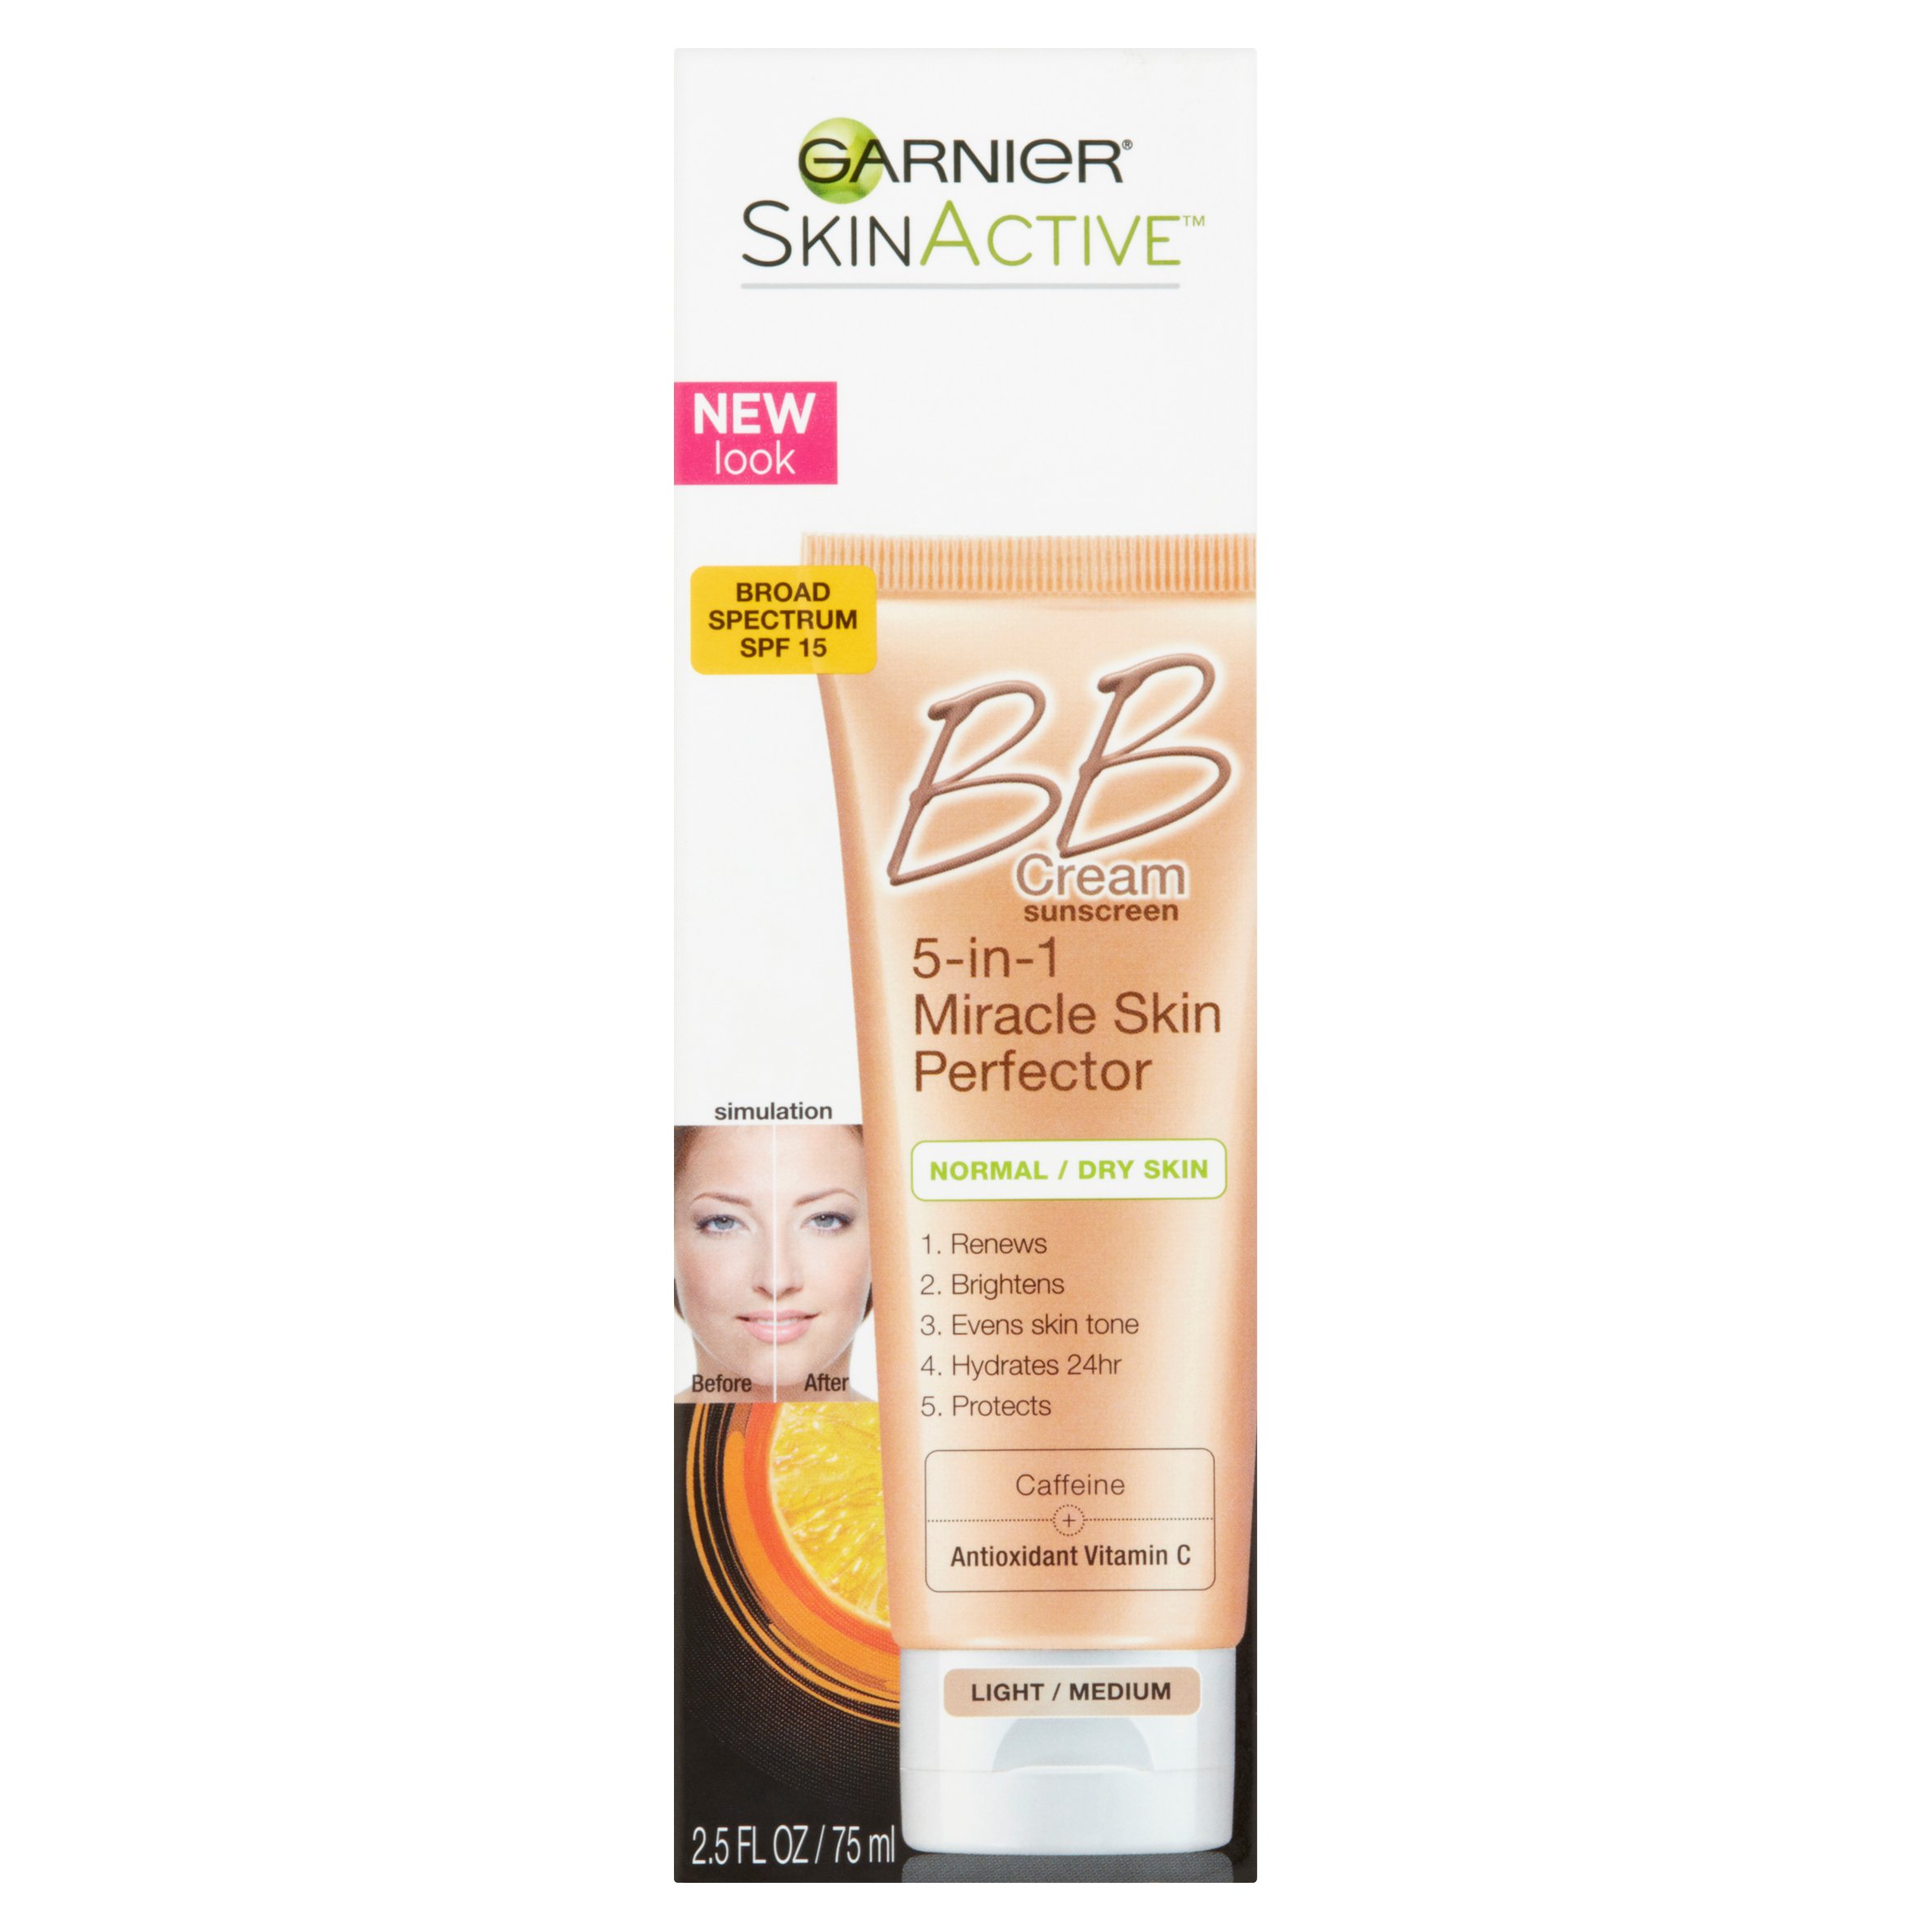 Garnier SkinActive Light/Medium BB Cream Sunscreen Broad Spectrum, SPF 15, 2.5 fl oz - image 1 of 4